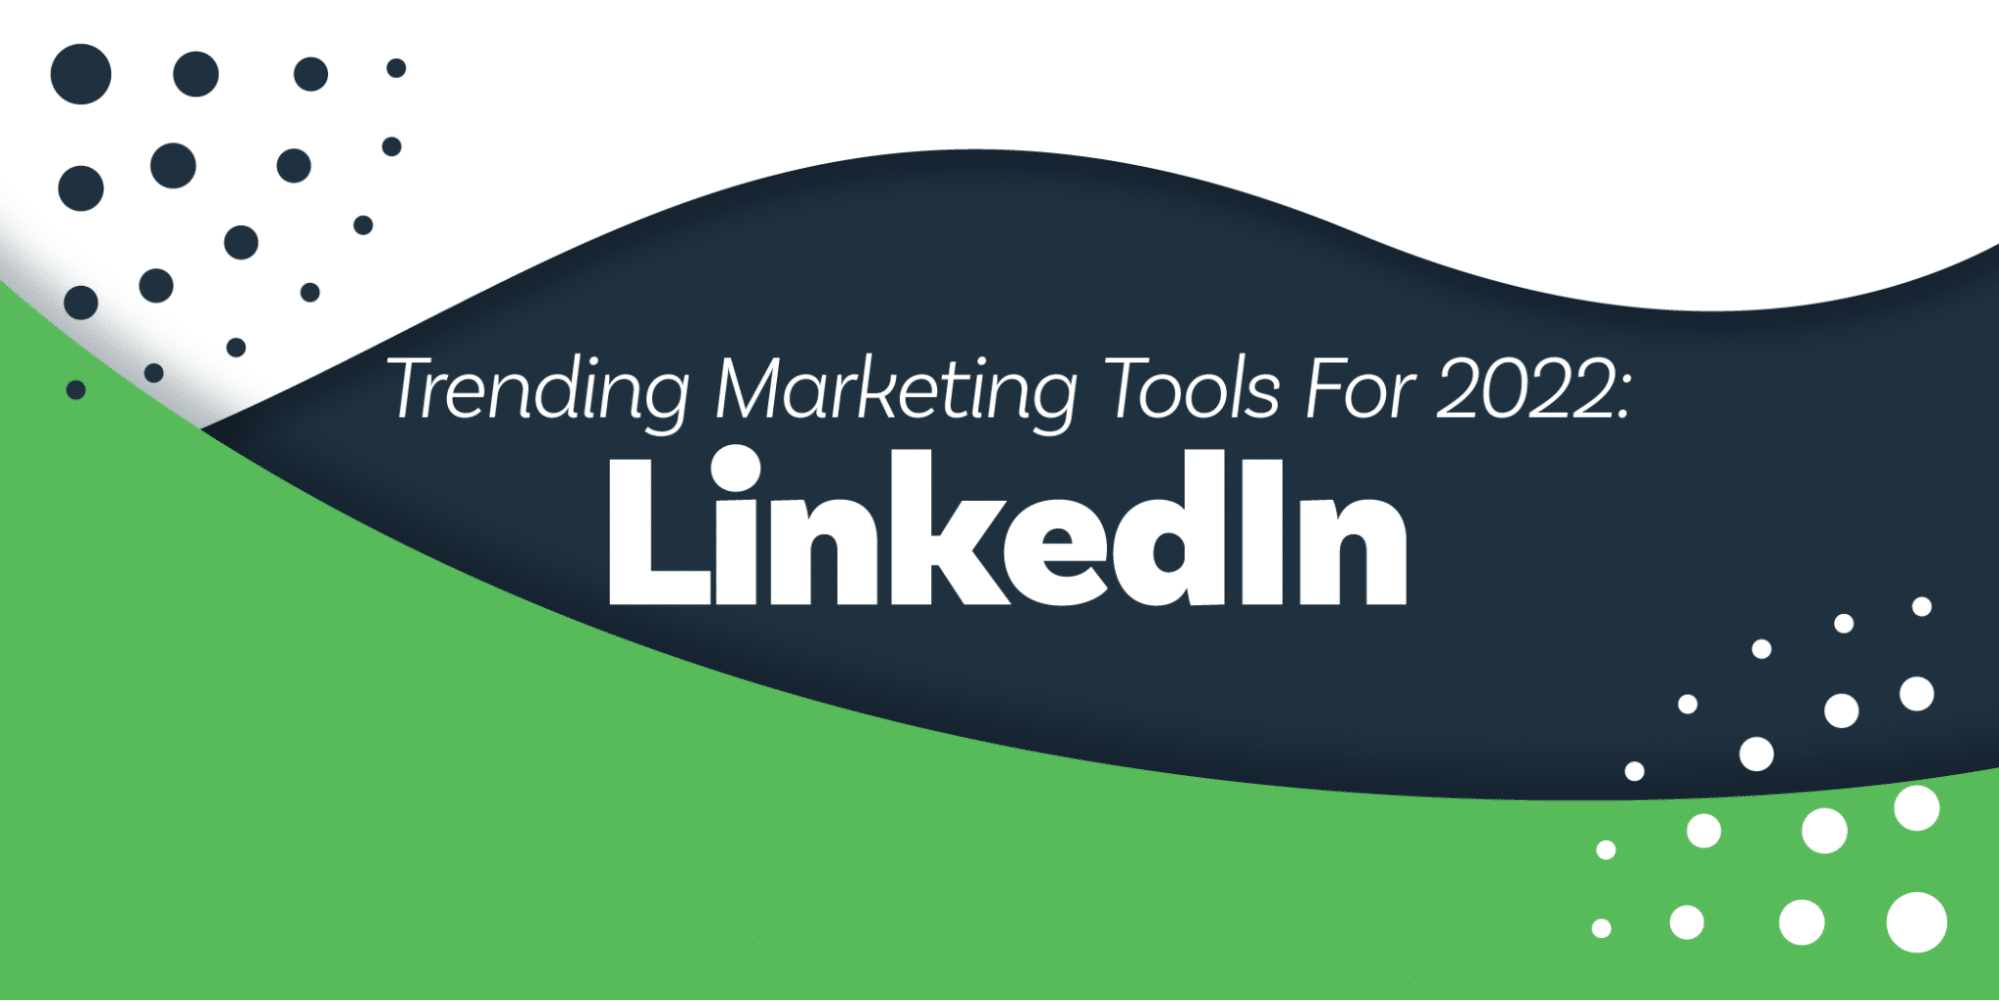 LinkedIn: Trending Marketing Tools